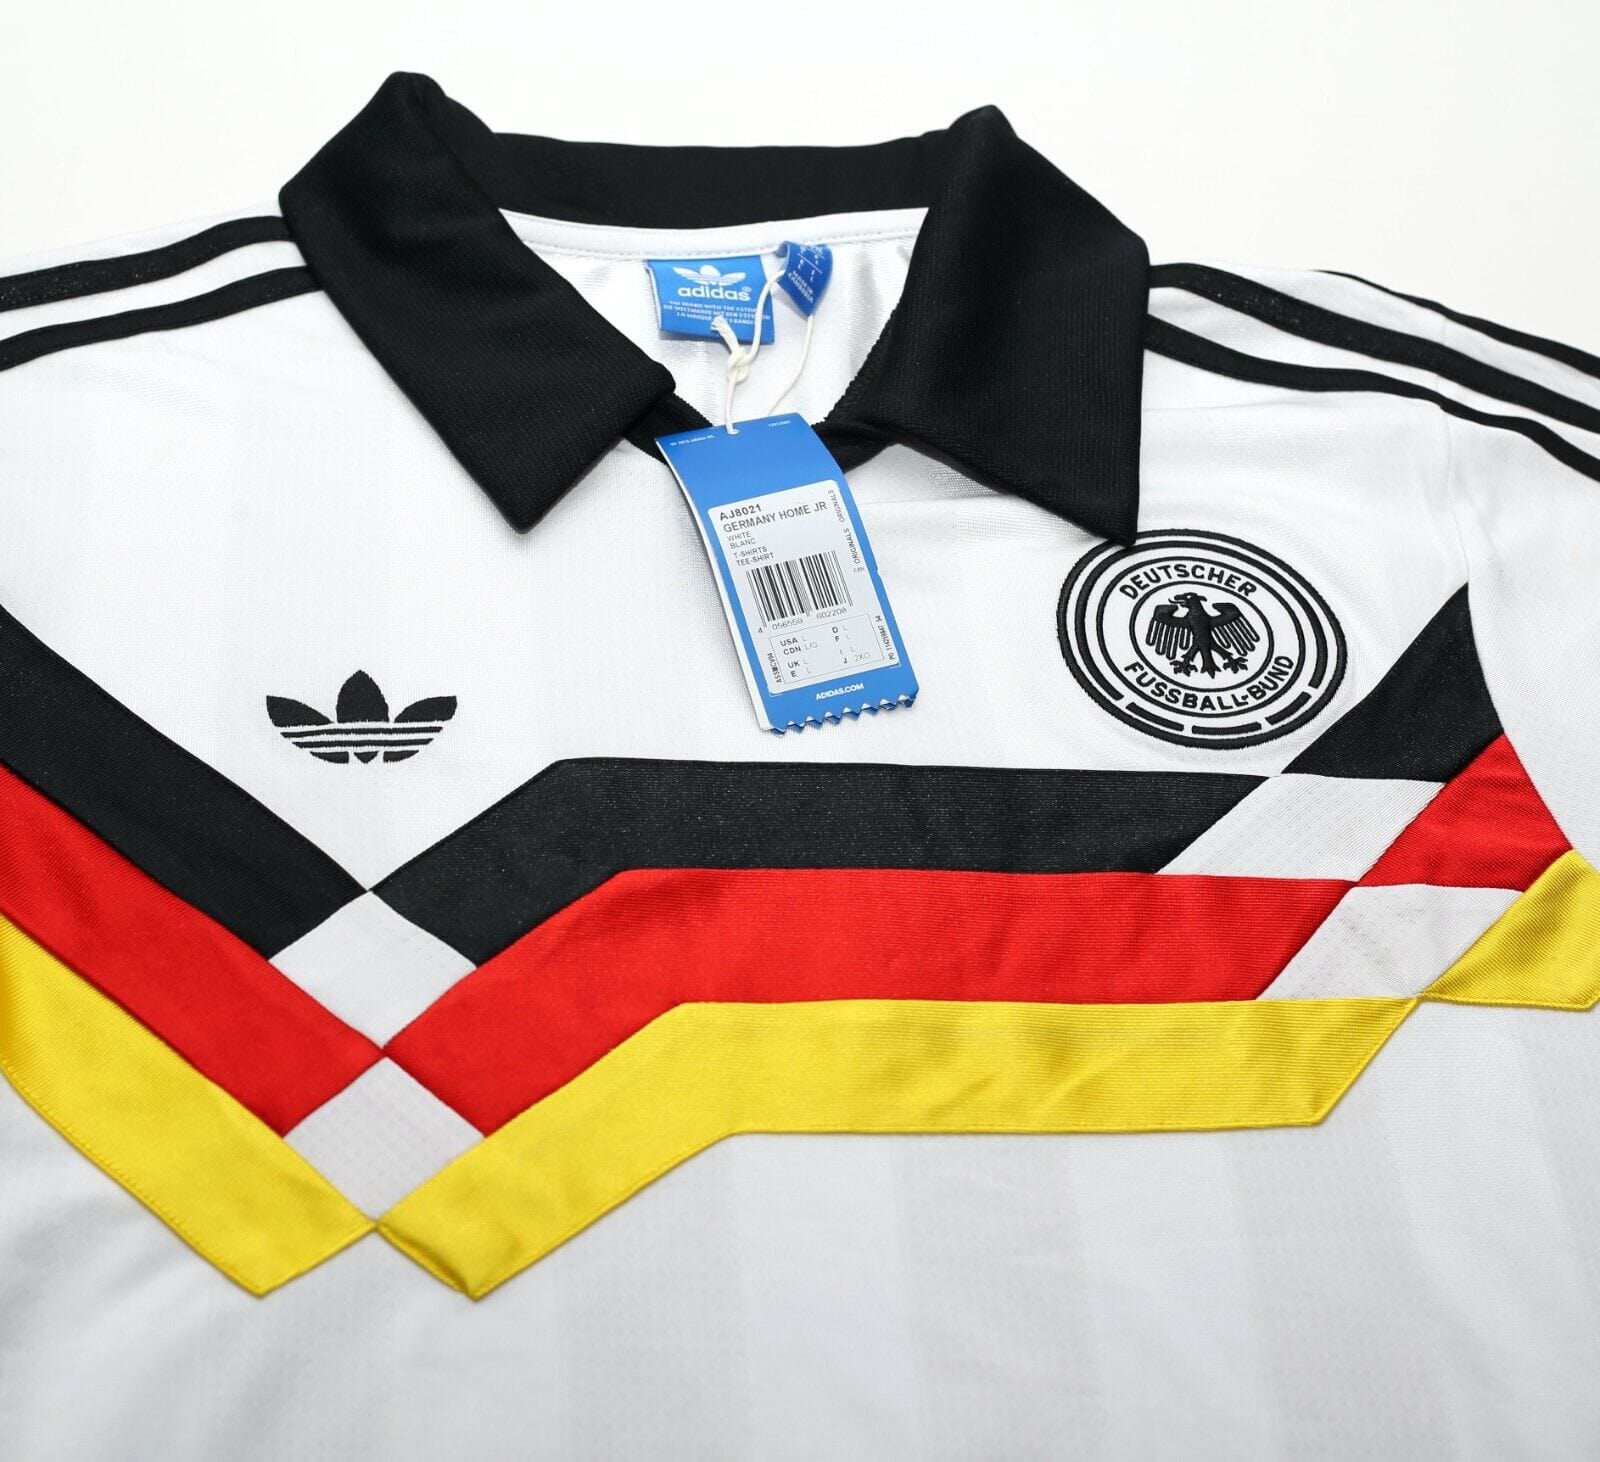 1988/91 WEST GERMANY World Cup 1990 adidas Originals Football Shirt (M/L) BNWT